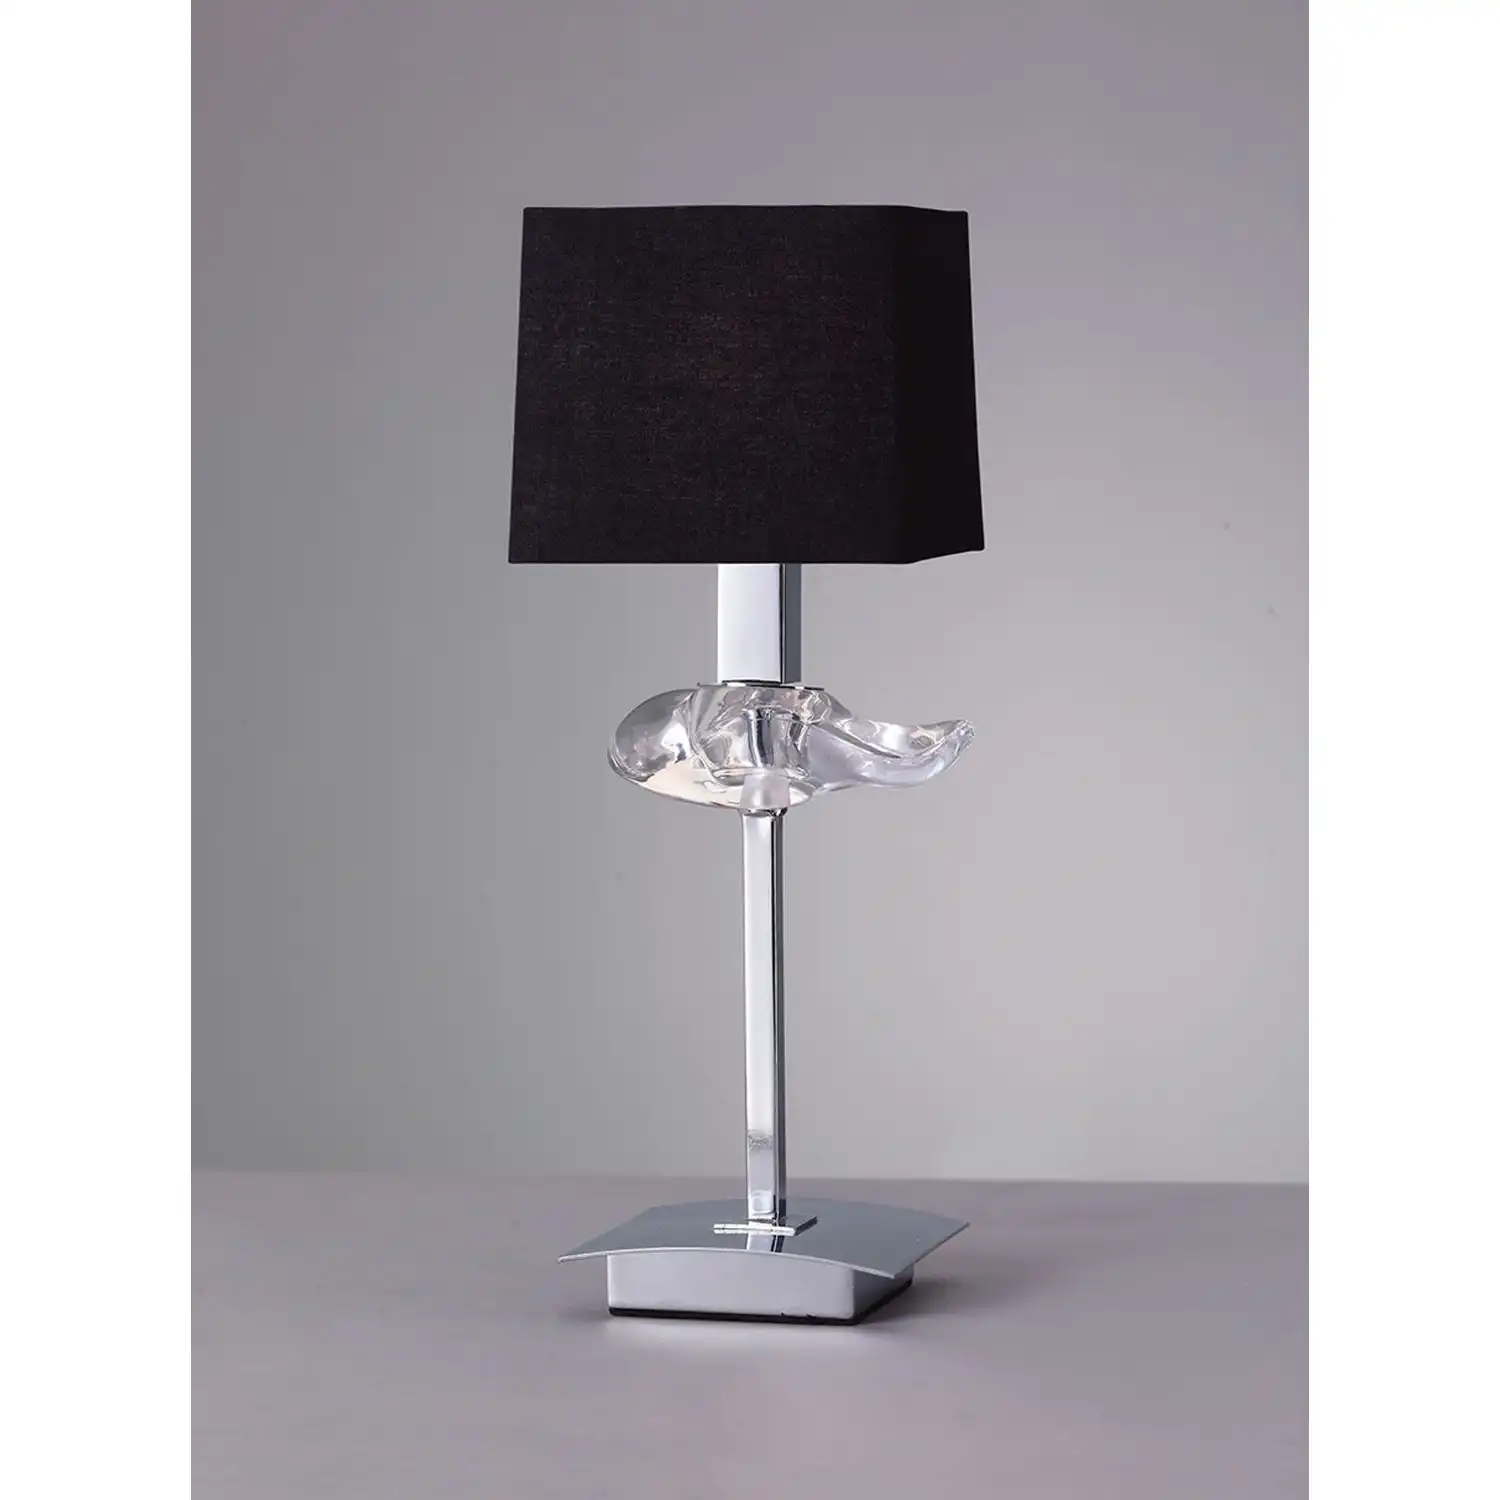 Akira Table Lamp 1 Light E14, Polished Chrome With Black Shade